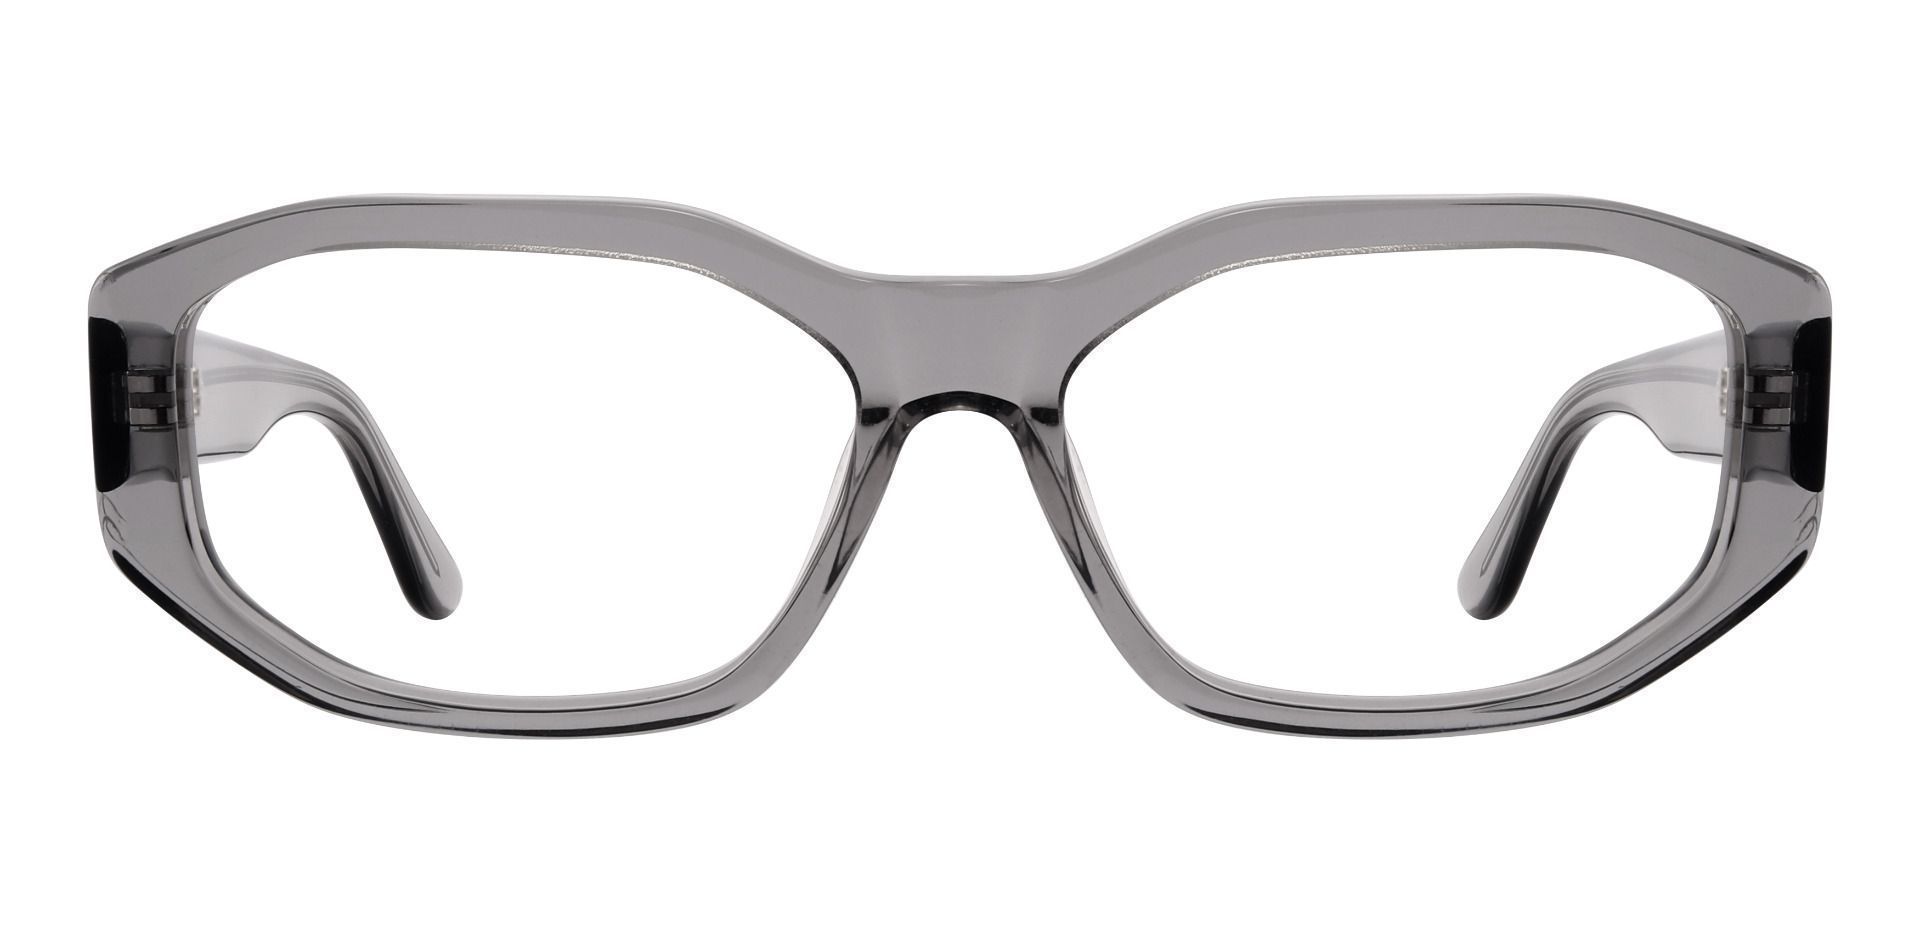 Sayre Rectangle Reading Glasses - Gray